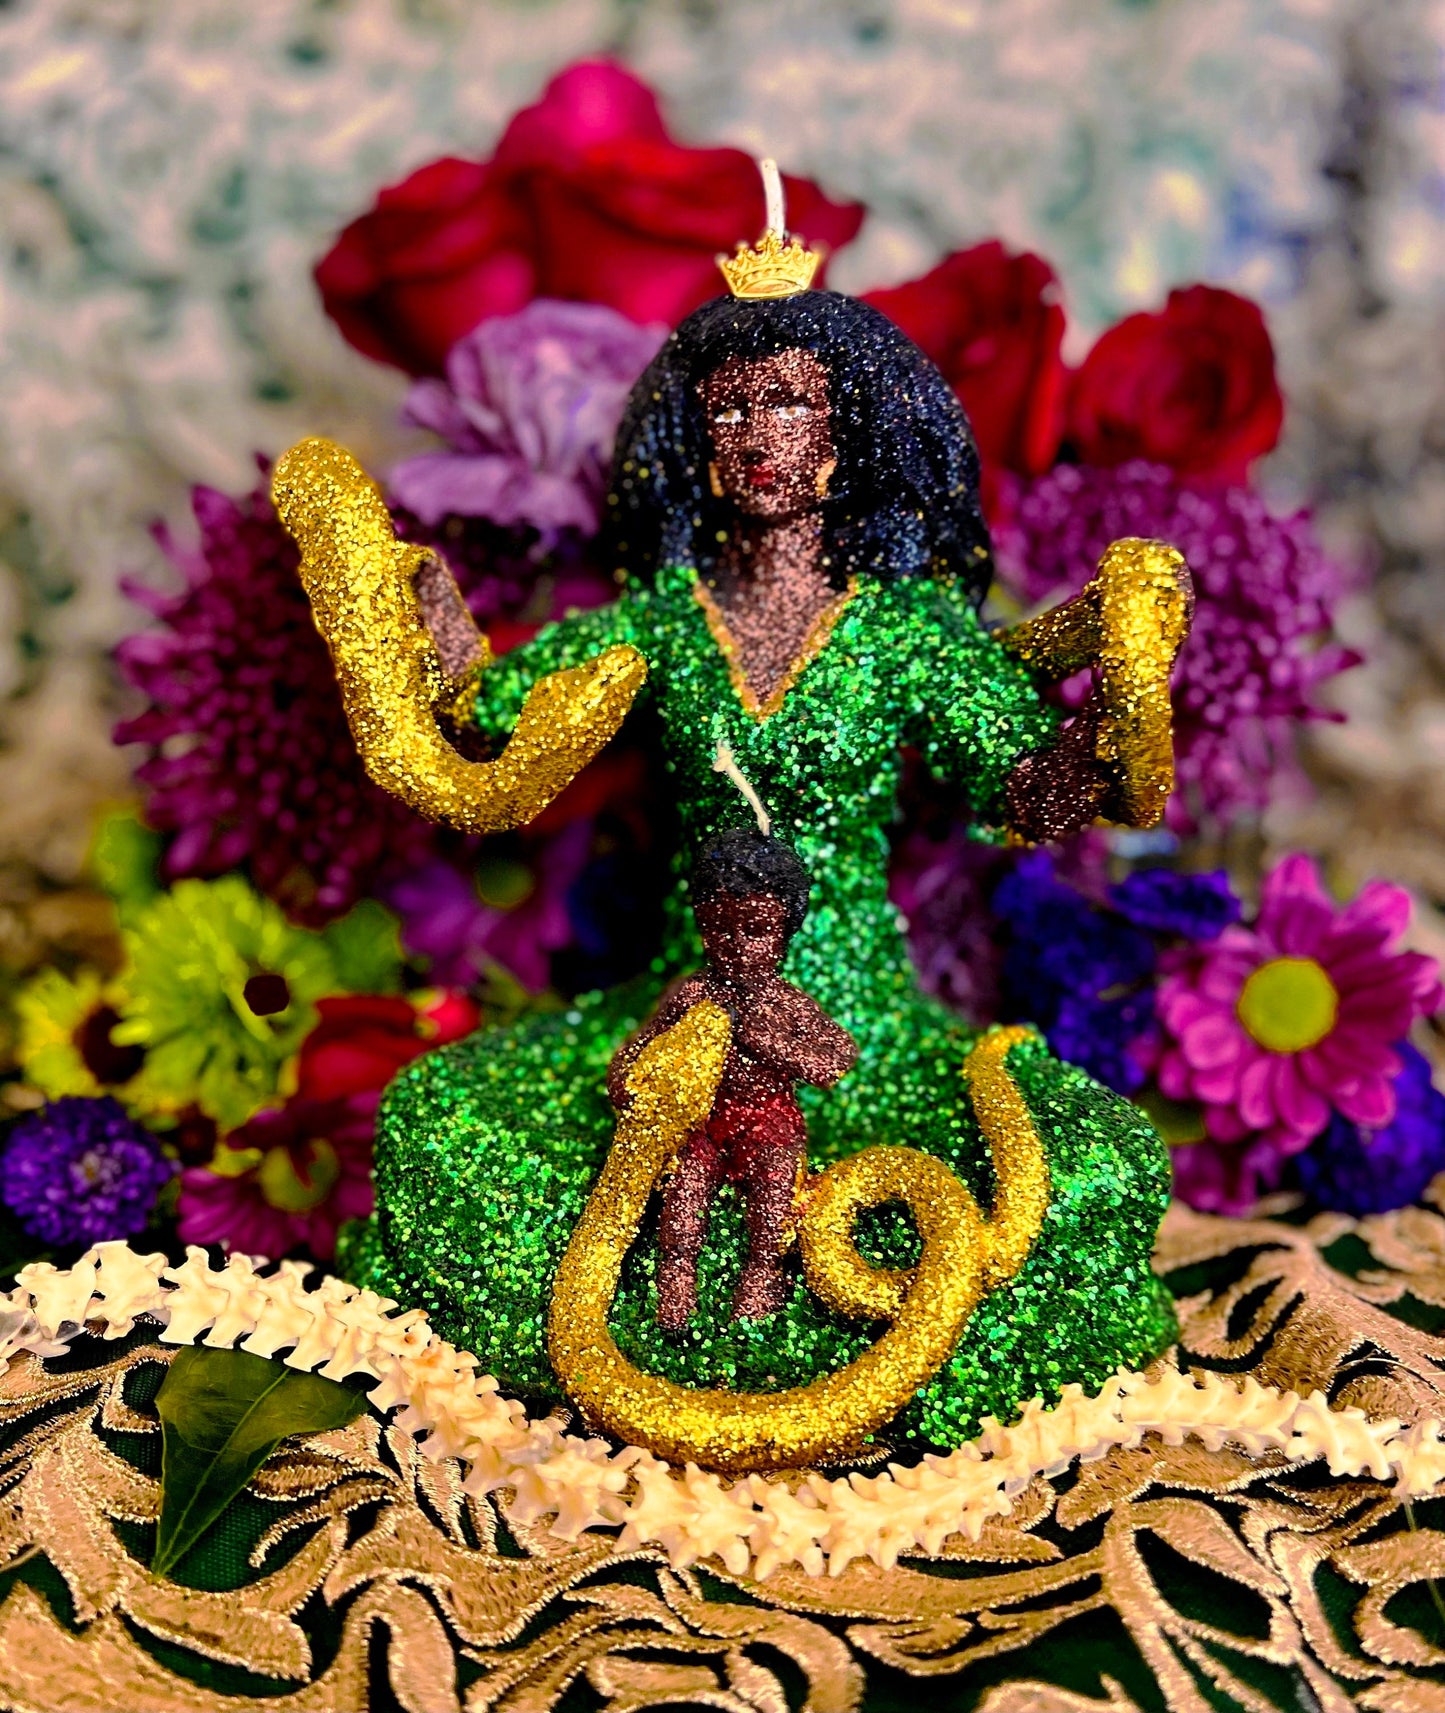 Filomena Lubana Figure Candle + Domination + Cleansed & Fixed + Santa Marta Dominadora + Marta La Culebra + Saint Martha The Dominator